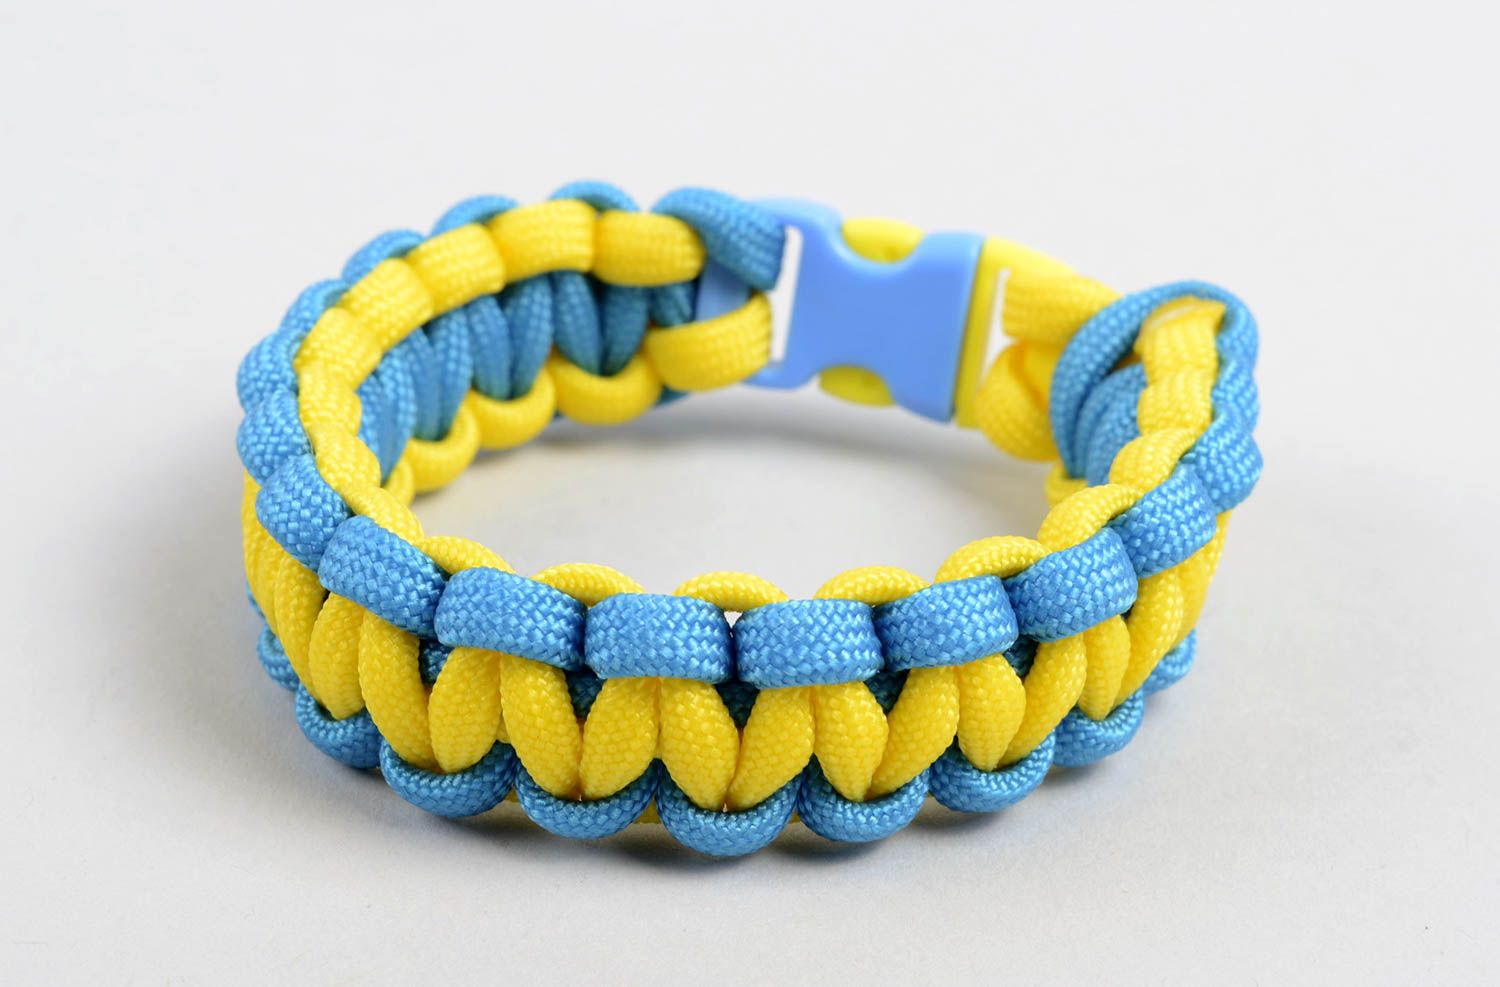 Handmade woven friendship bracelet paracord bracelet parachute cord bracelet photo 1